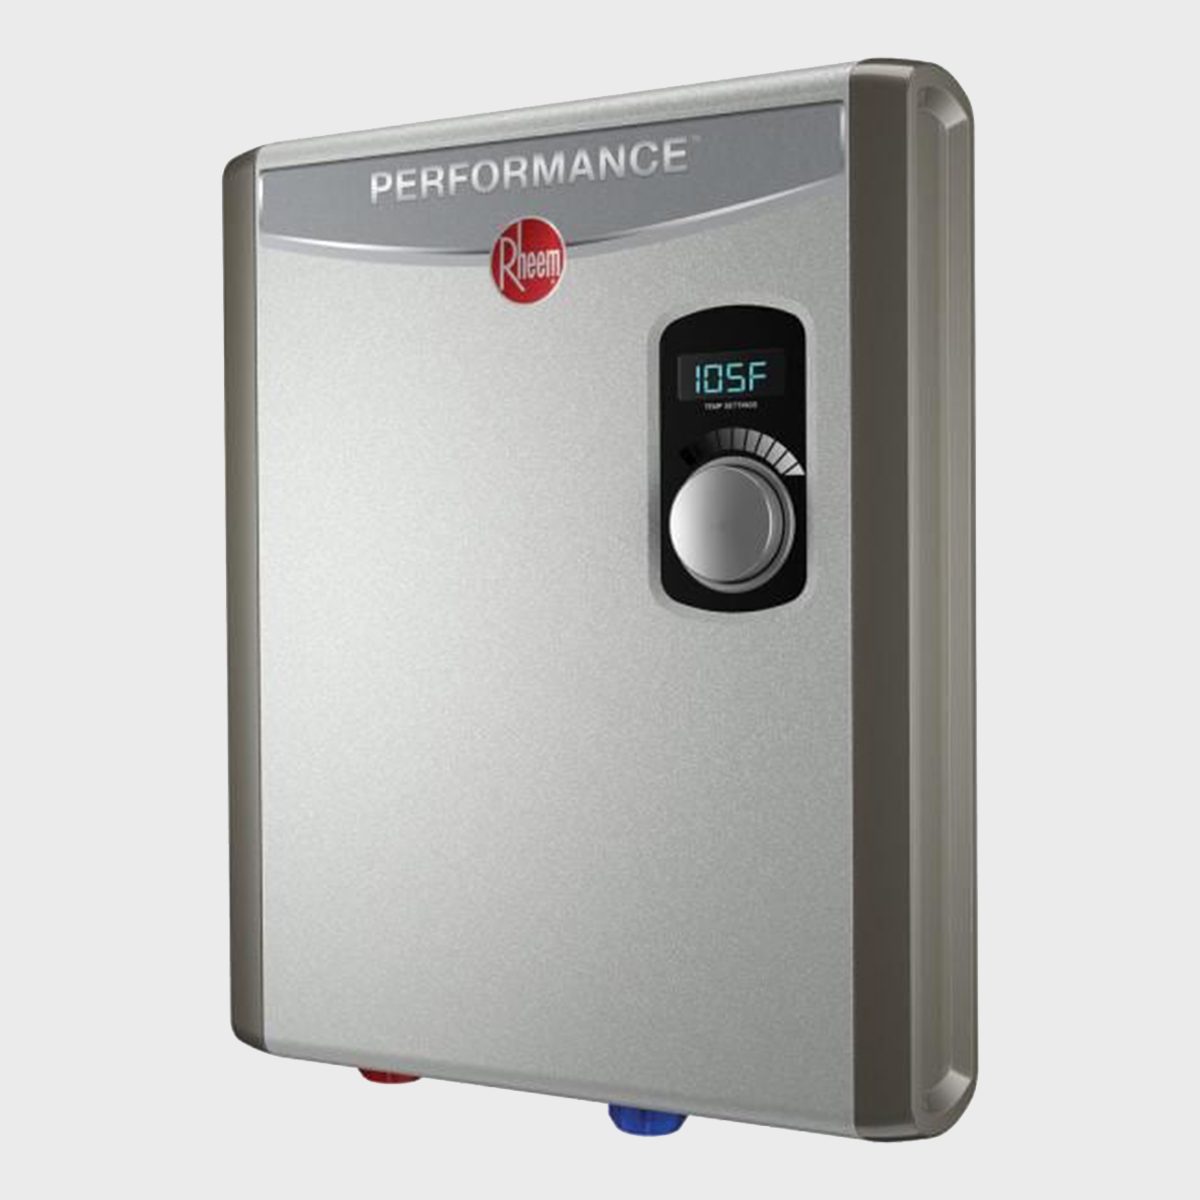 Rheem Performance Self Modulating Water Heater